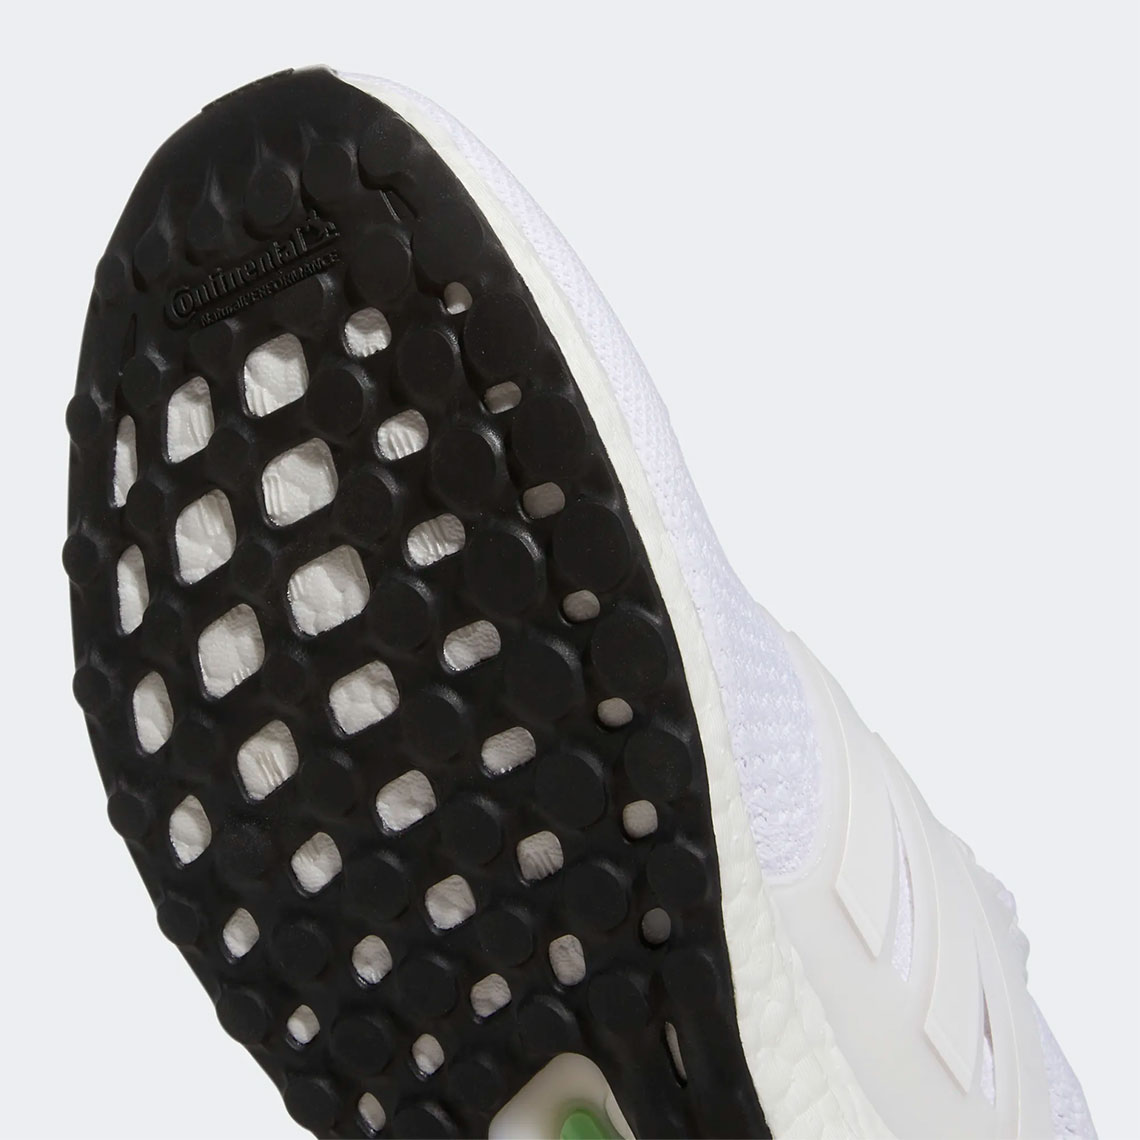 Adidas Ultra Boost White Black Gv8740 Release Date 8